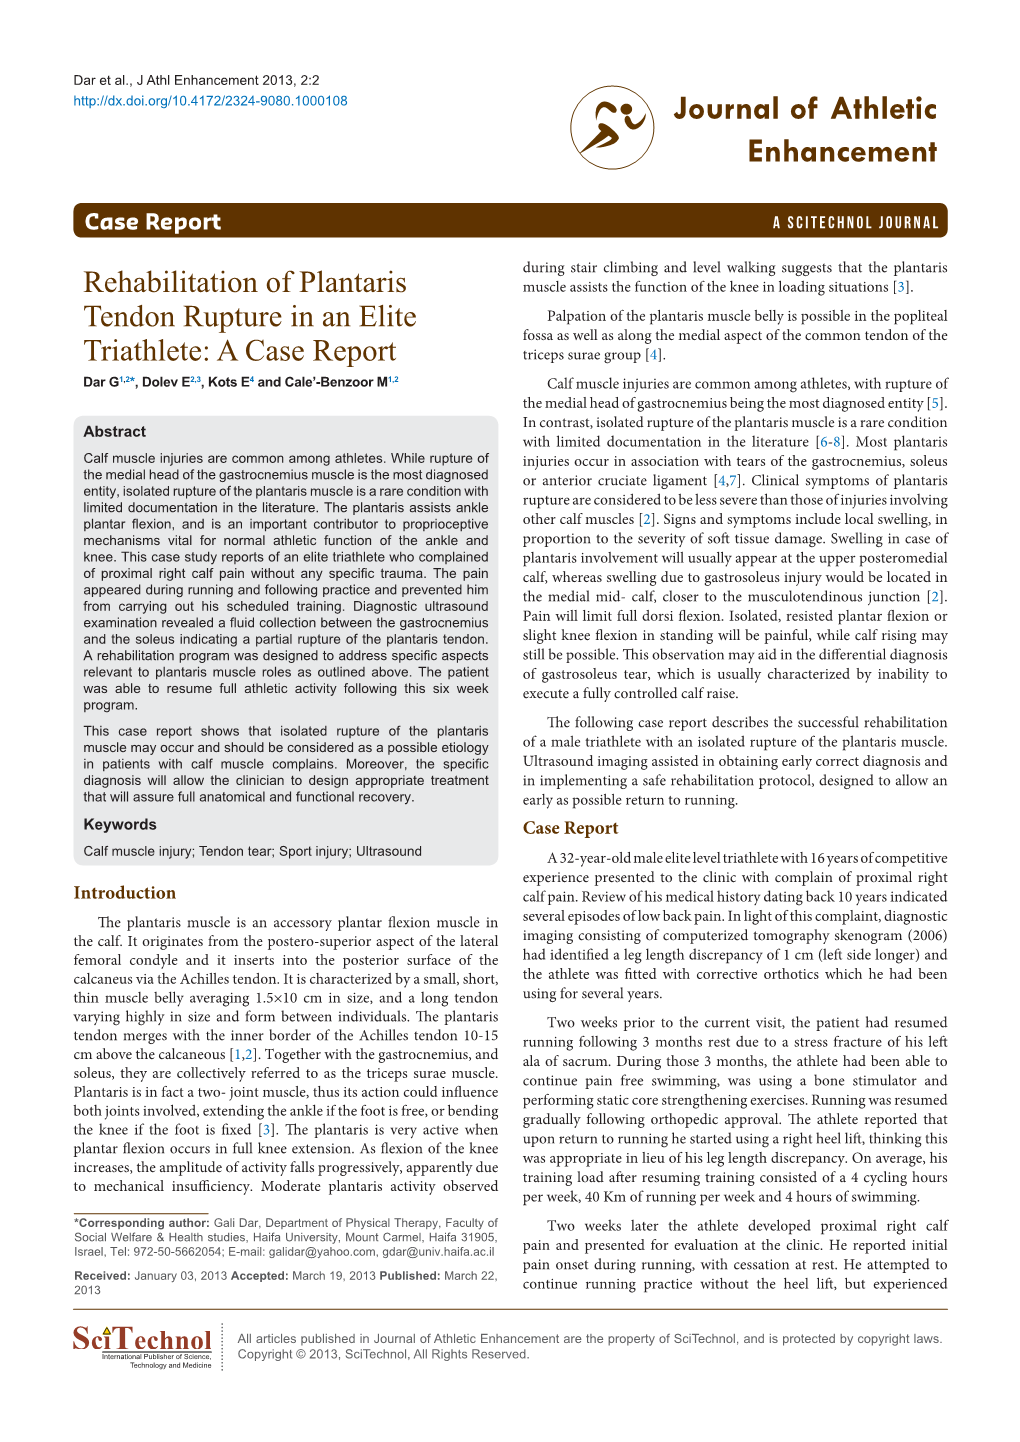 Rehabilitation of Plantaris Tendon Rupture in an Elite Triathlete: a Case Report